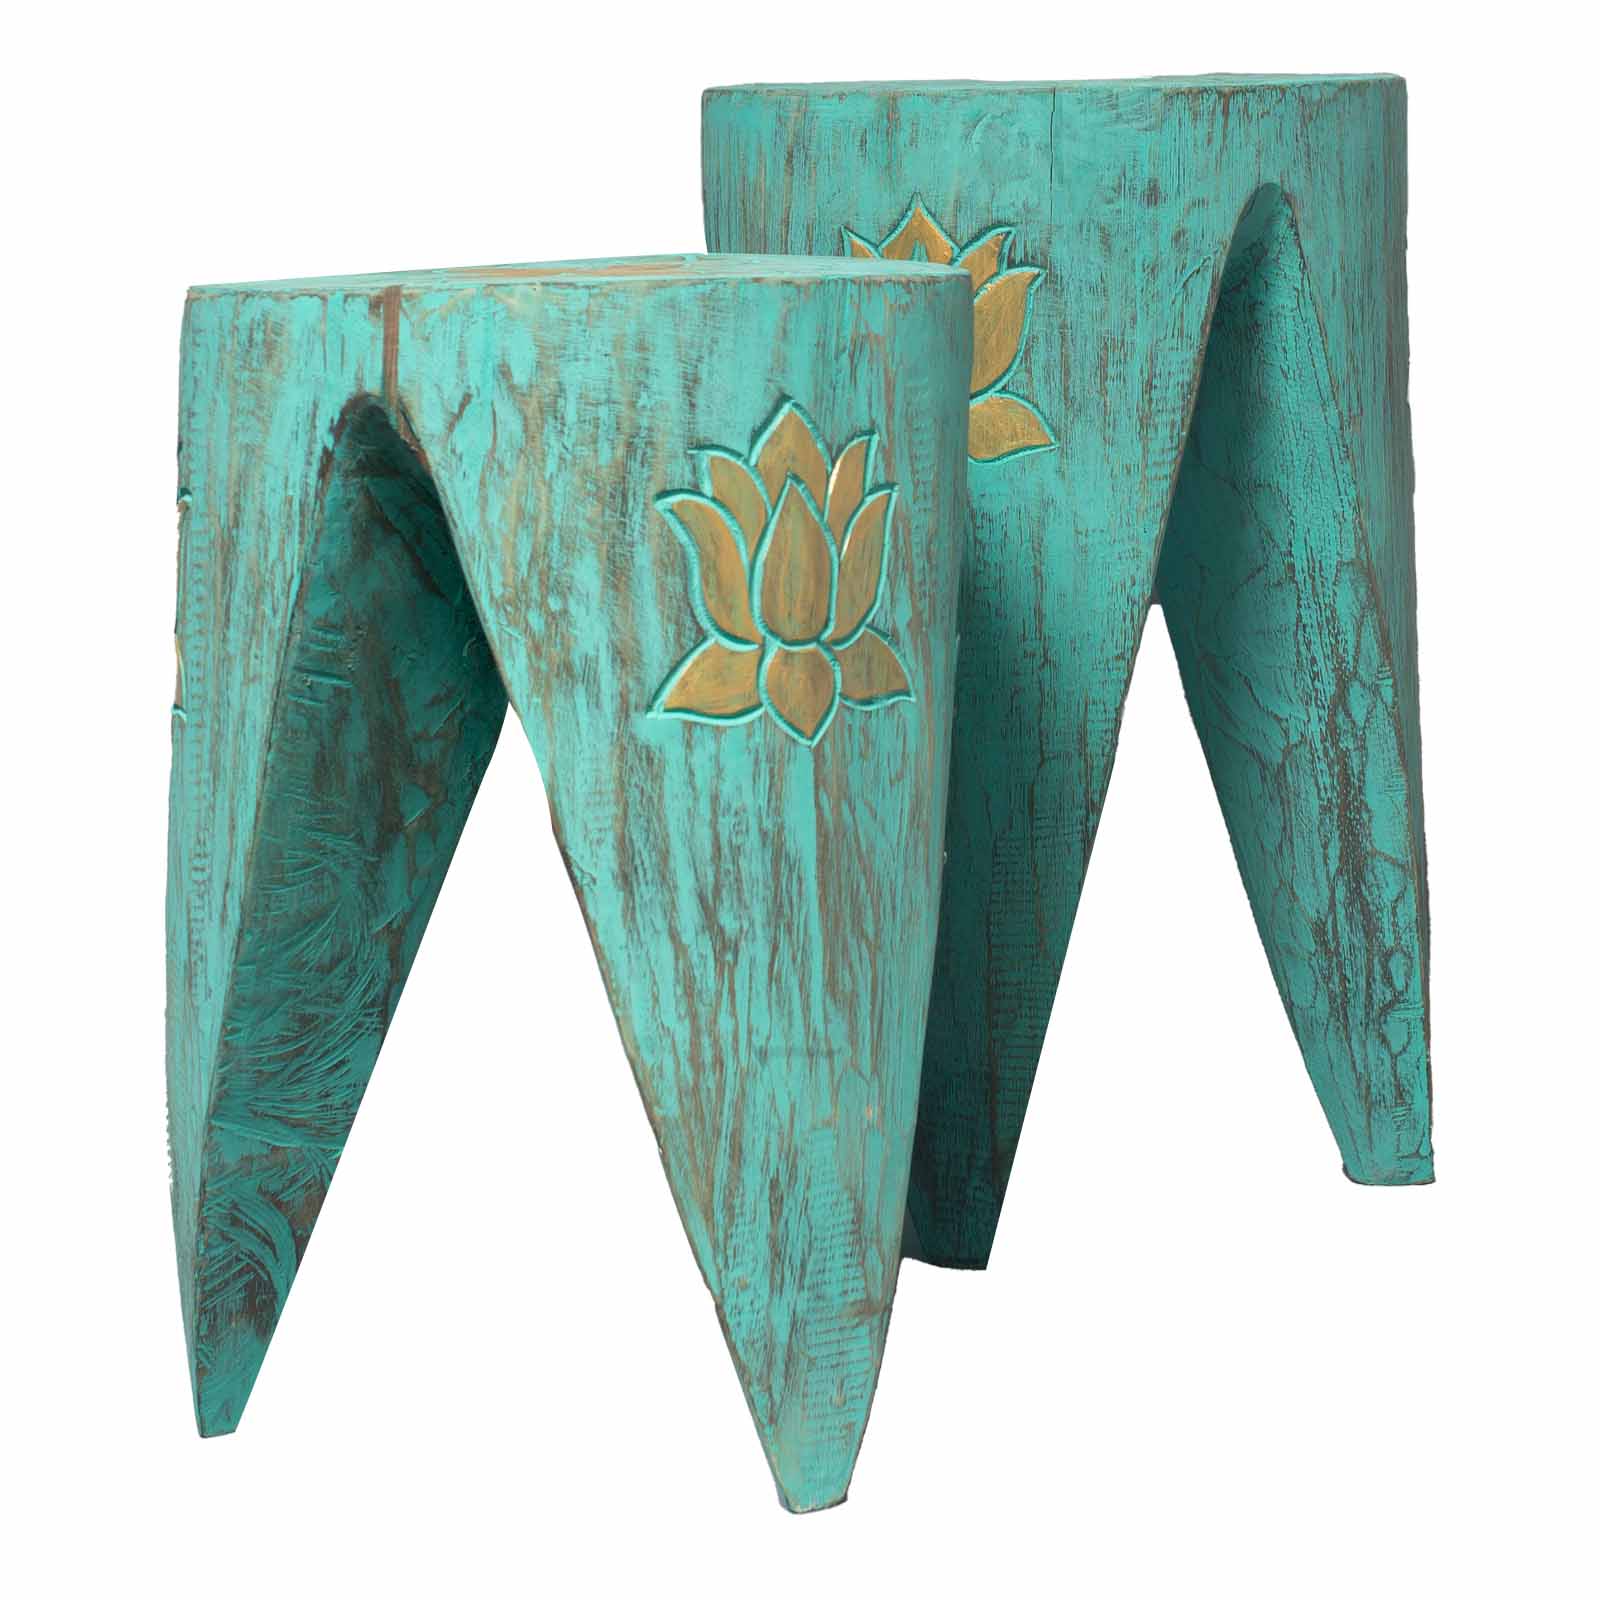 Interlocking Table/Stool set of 2 - Turquoise